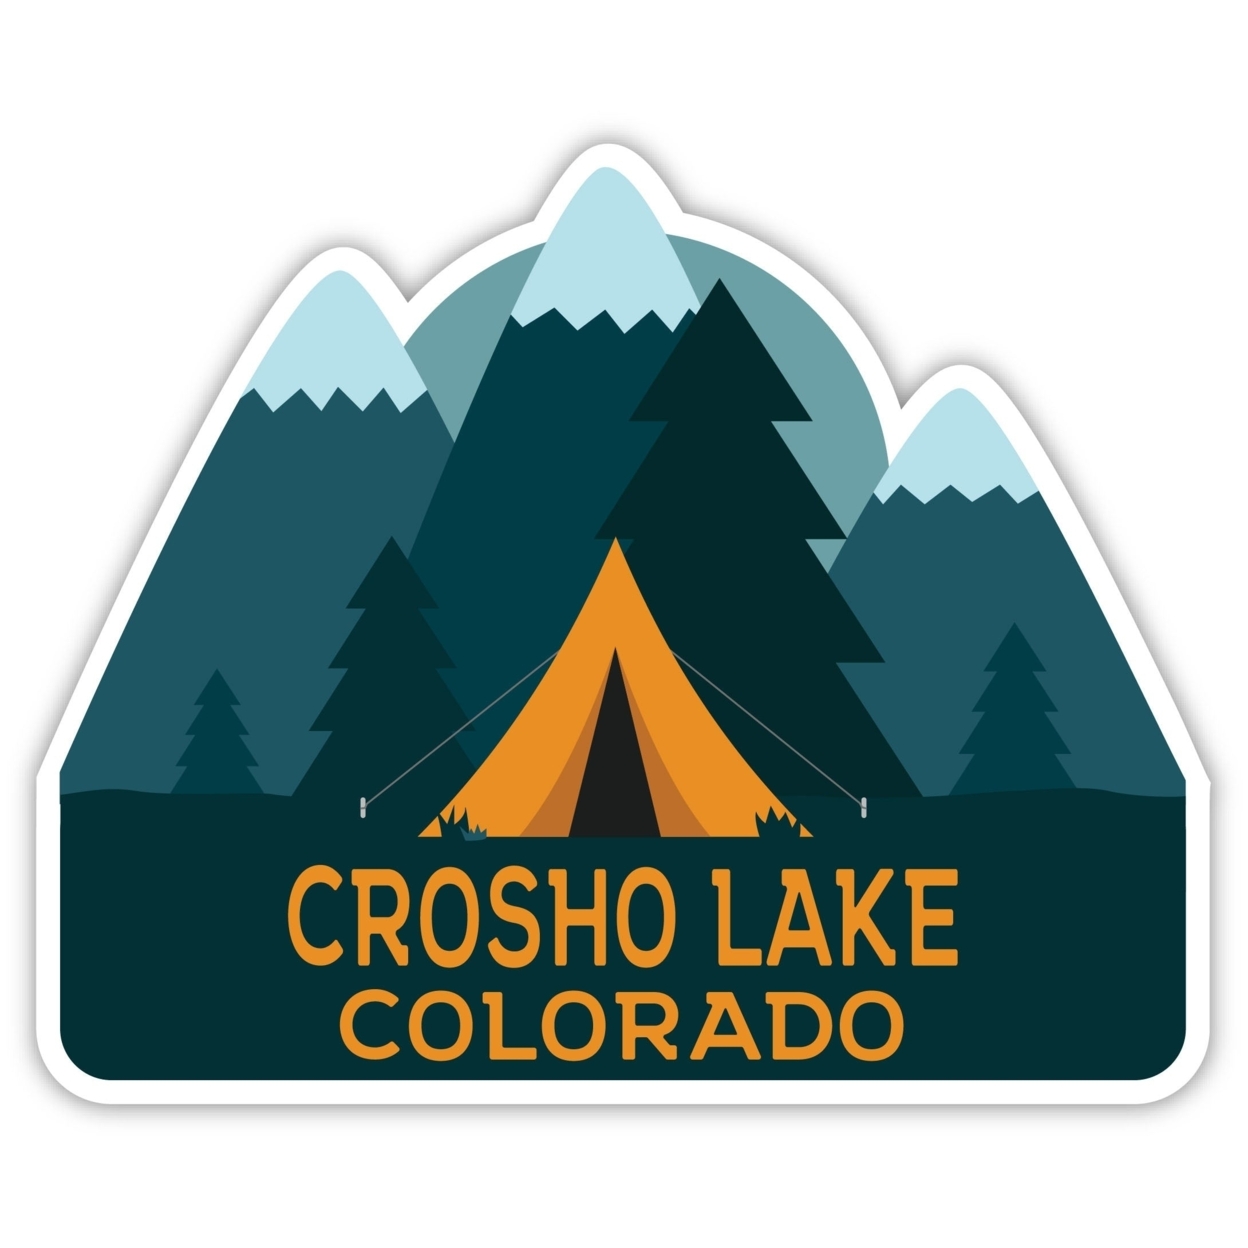 Crosho Lake Colorado Souvenir Decorative Stickers (Choose Theme And Size) - Single Unit, 8-Inch, Tent